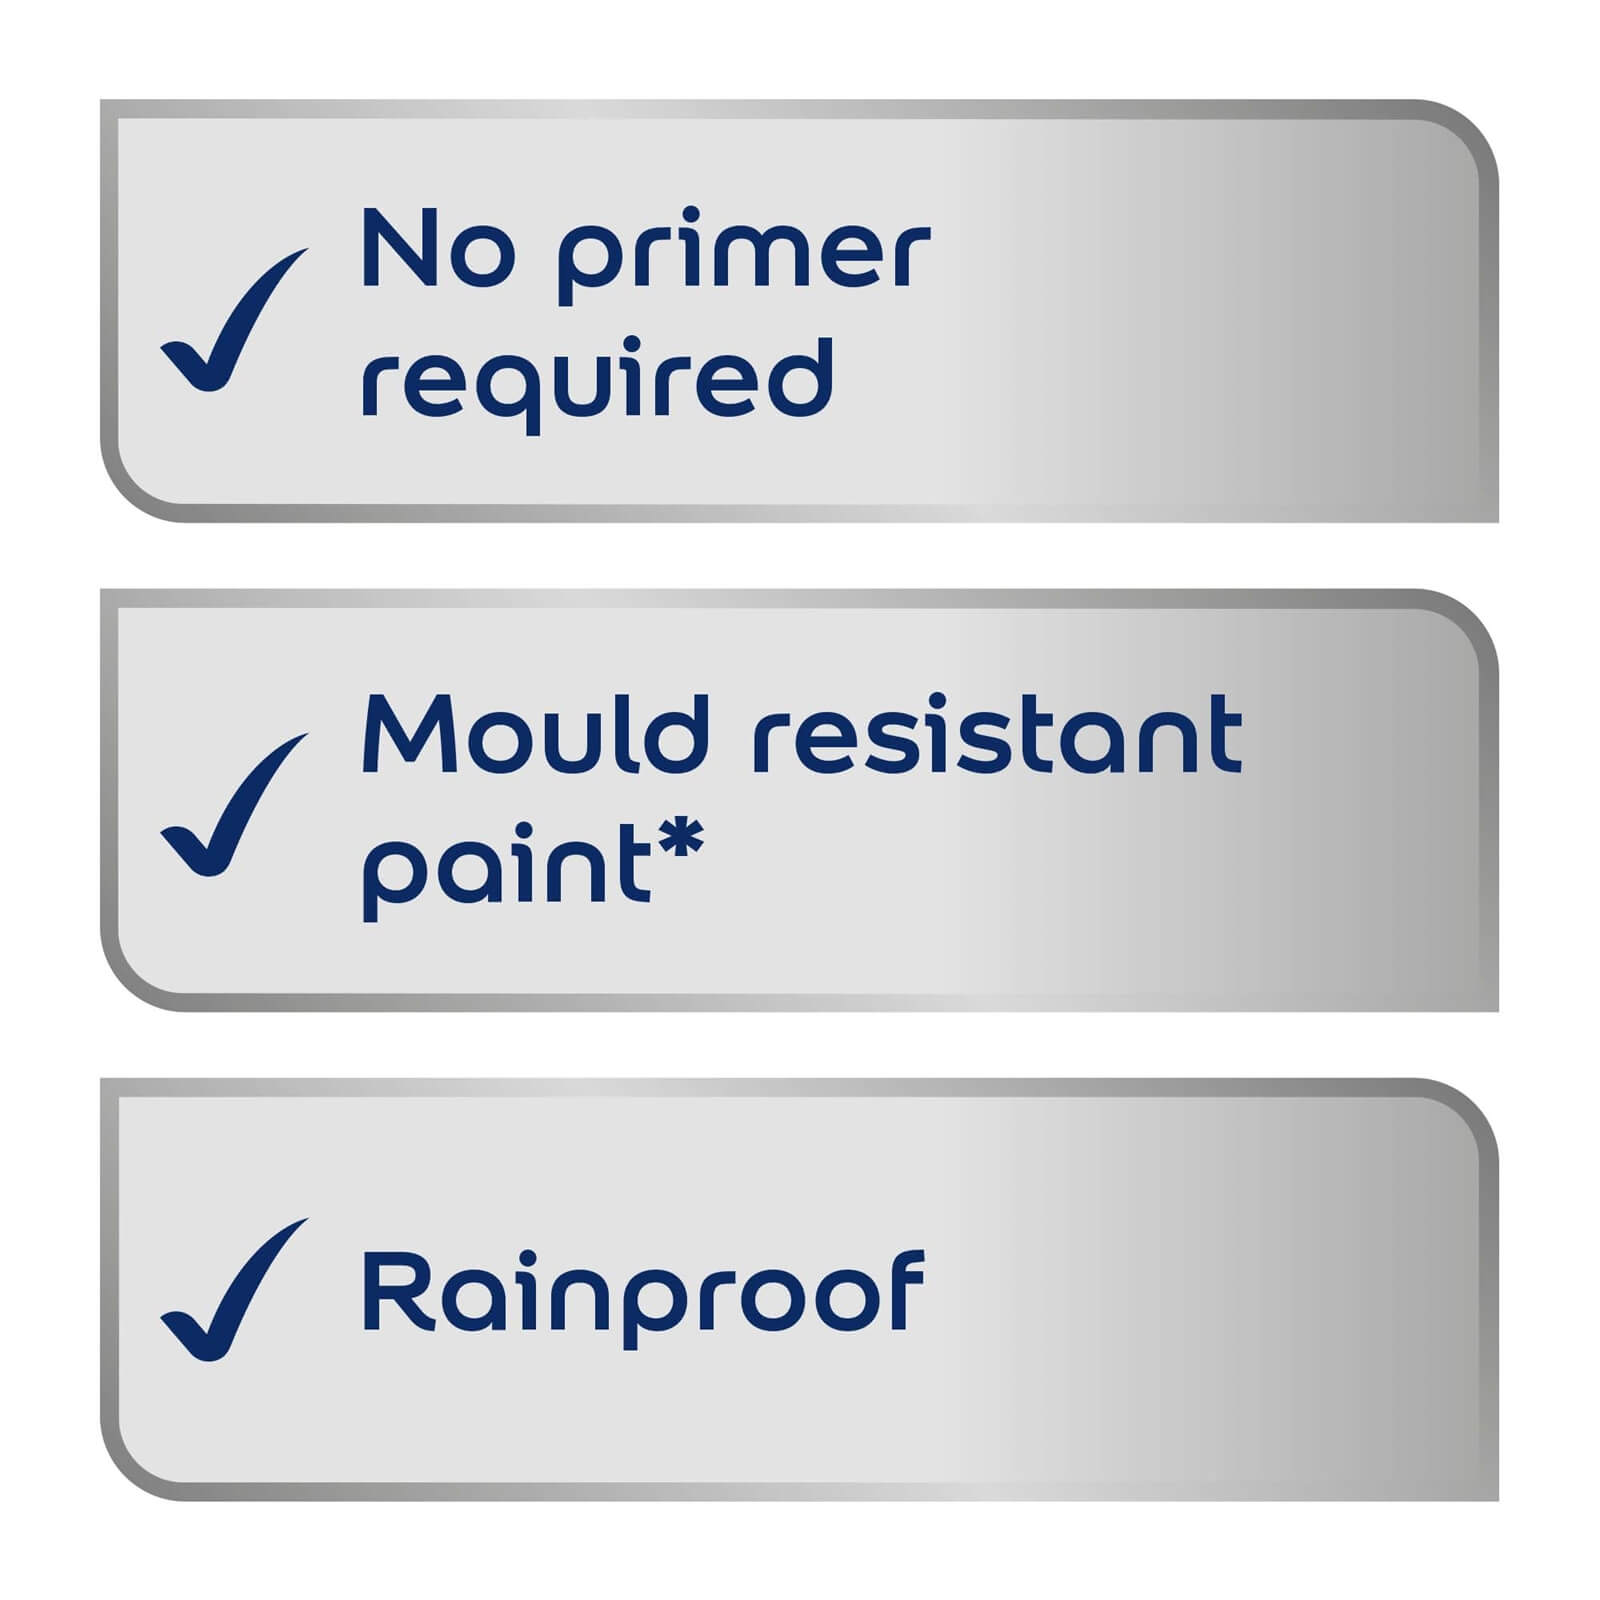 Dulux Weathershield Multi Surface Quick Dry Satin Paint White - 750ml